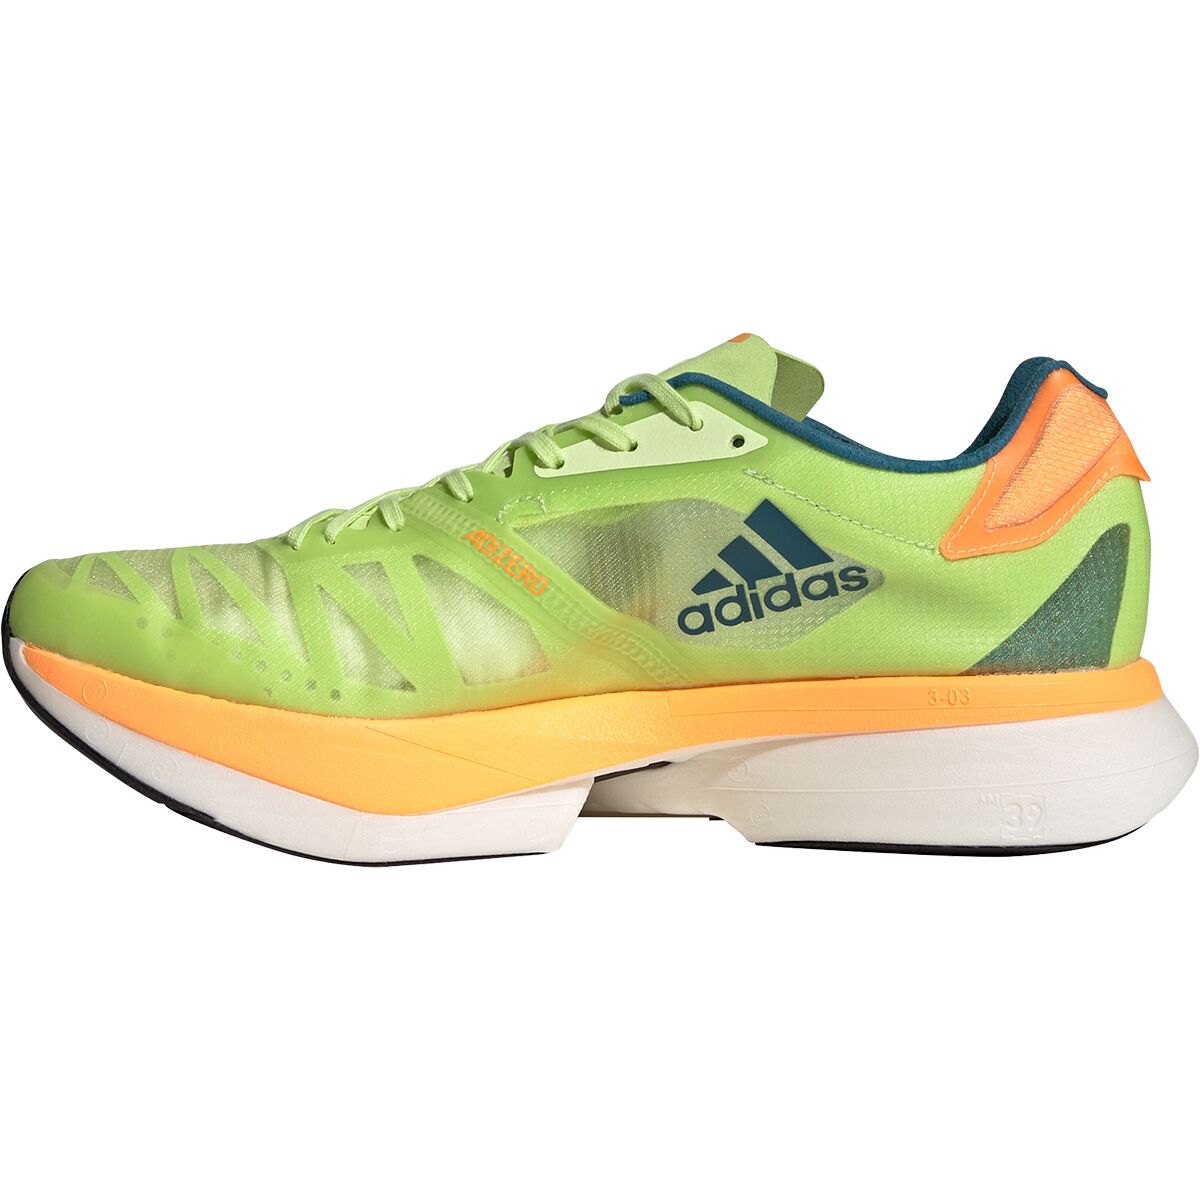 Adidas Adizero Adios Pro 2 Running Shoe - Footwear